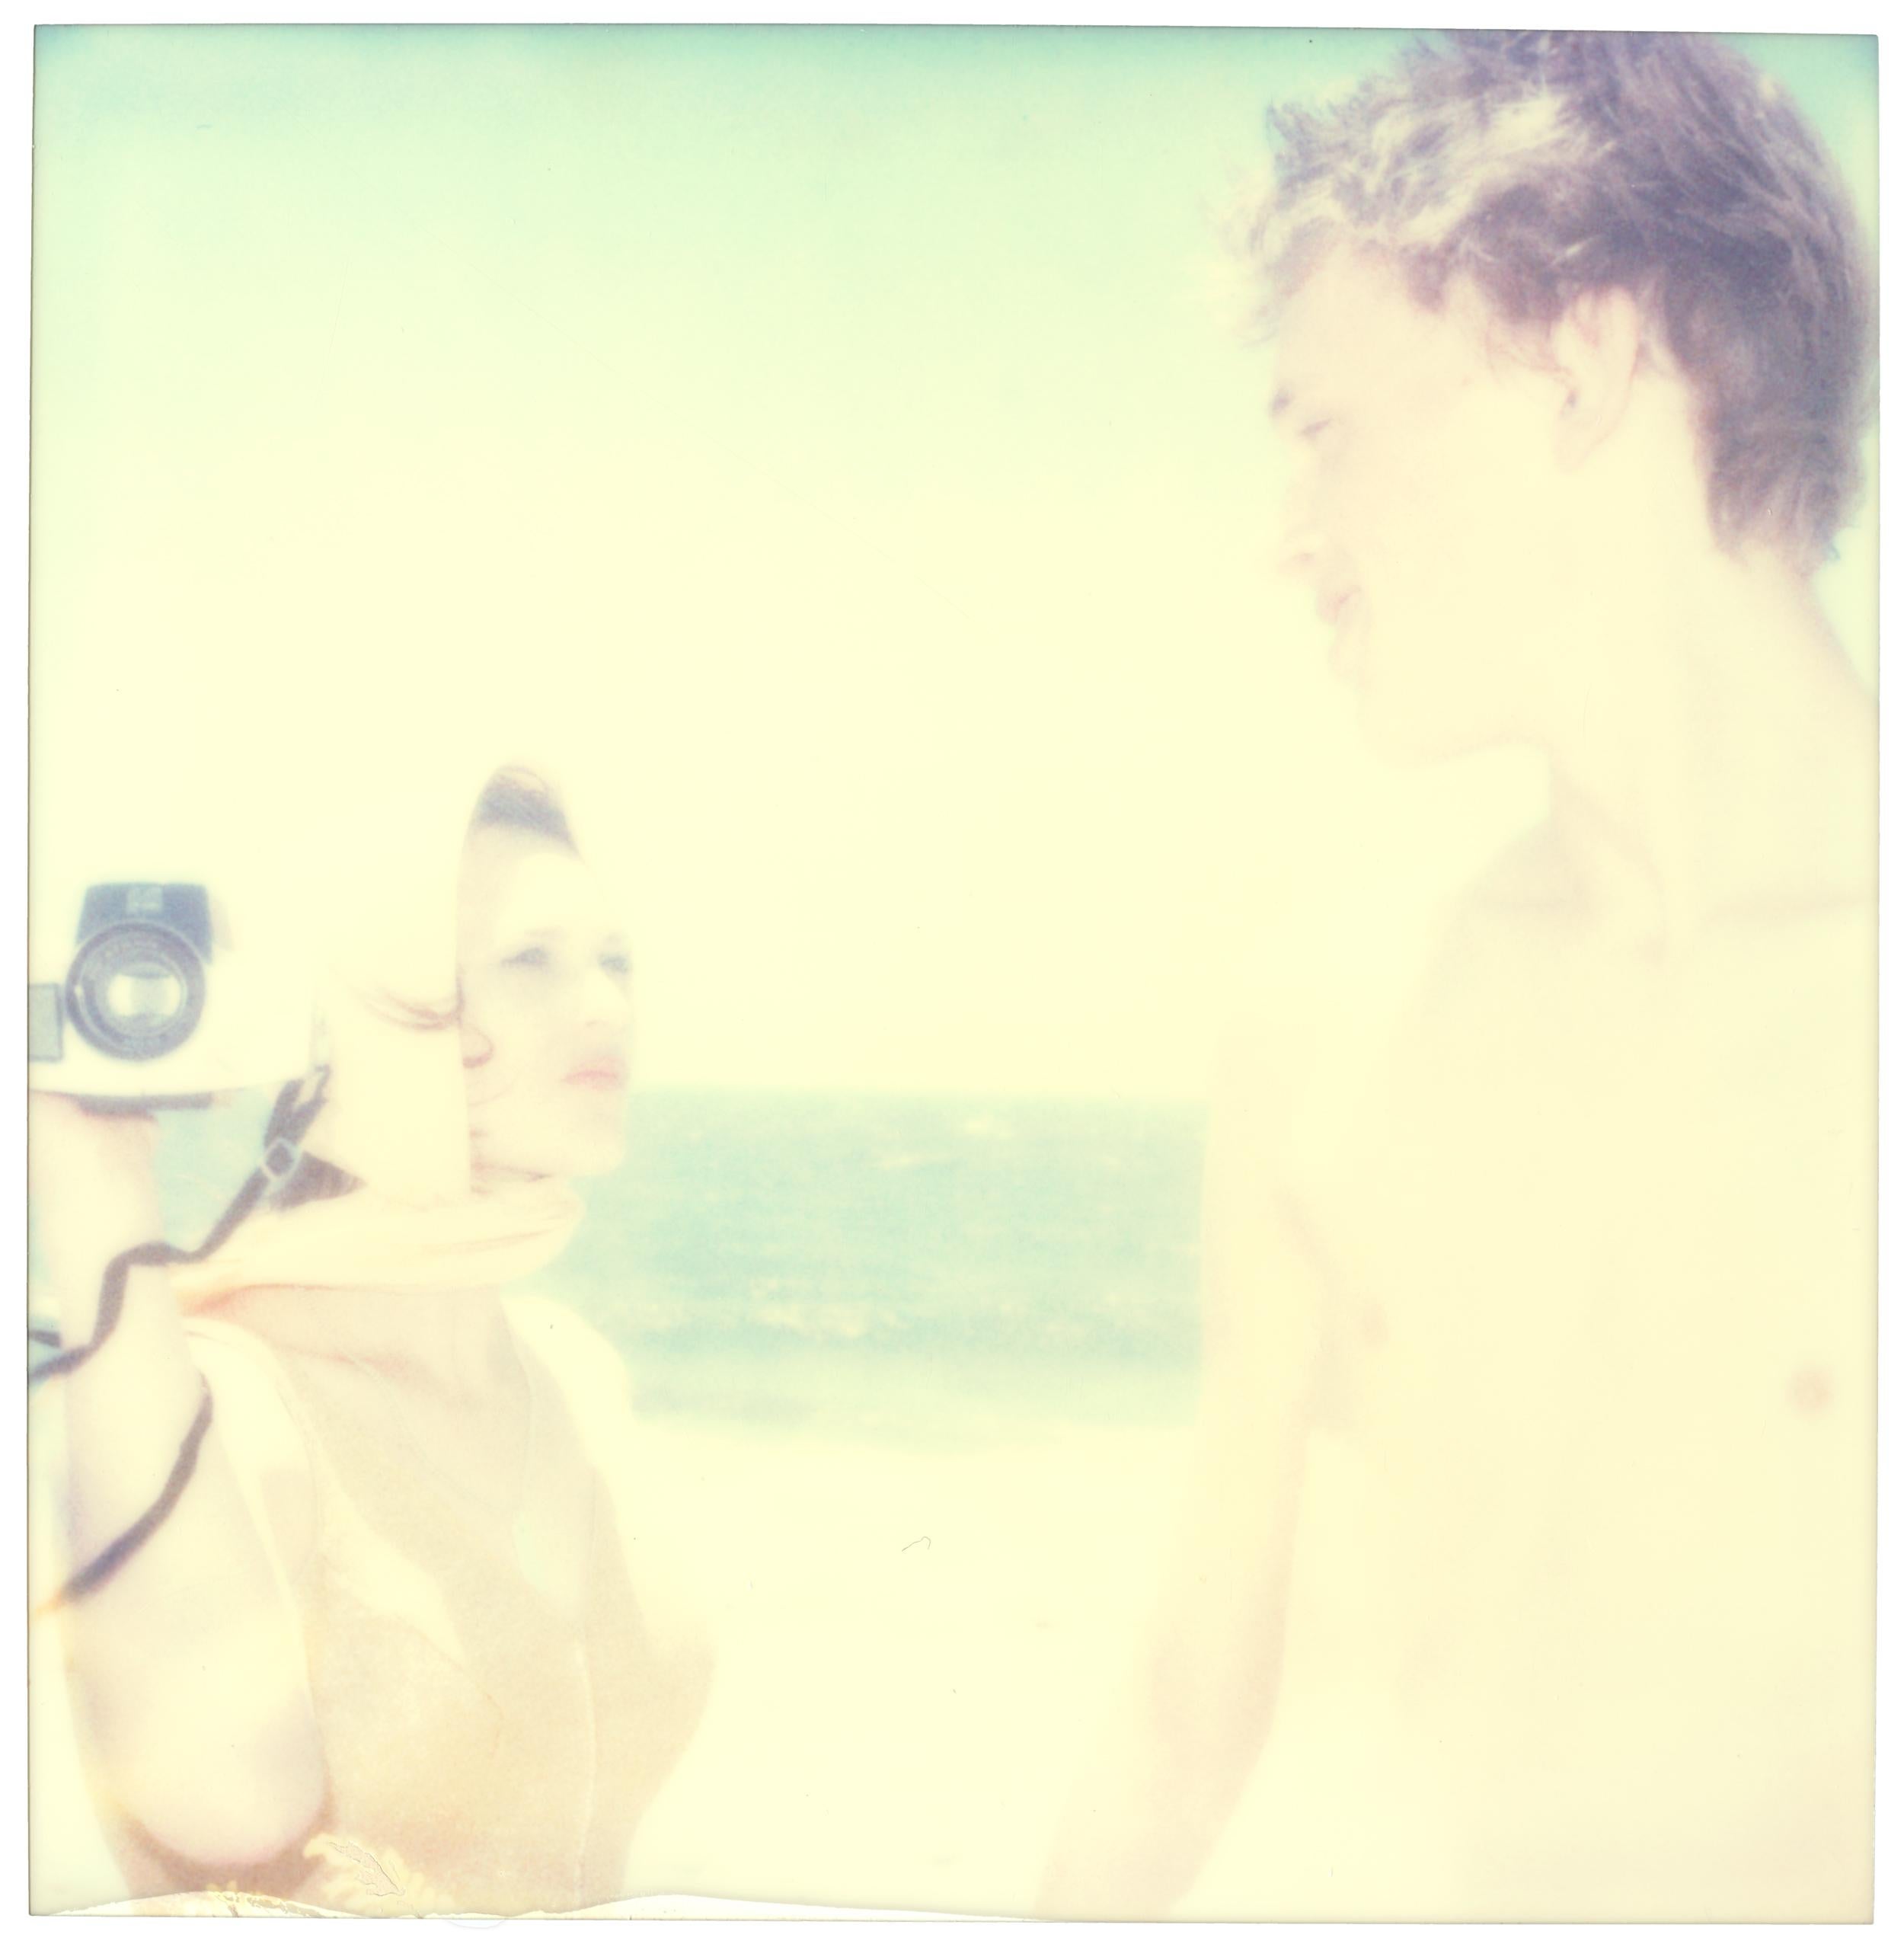 The Diva and the Boy (Beachshoot) - 9 pieces - Polaroid, Vintage, Contemporary - Beige Portrait Photograph by Stefanie Schneider